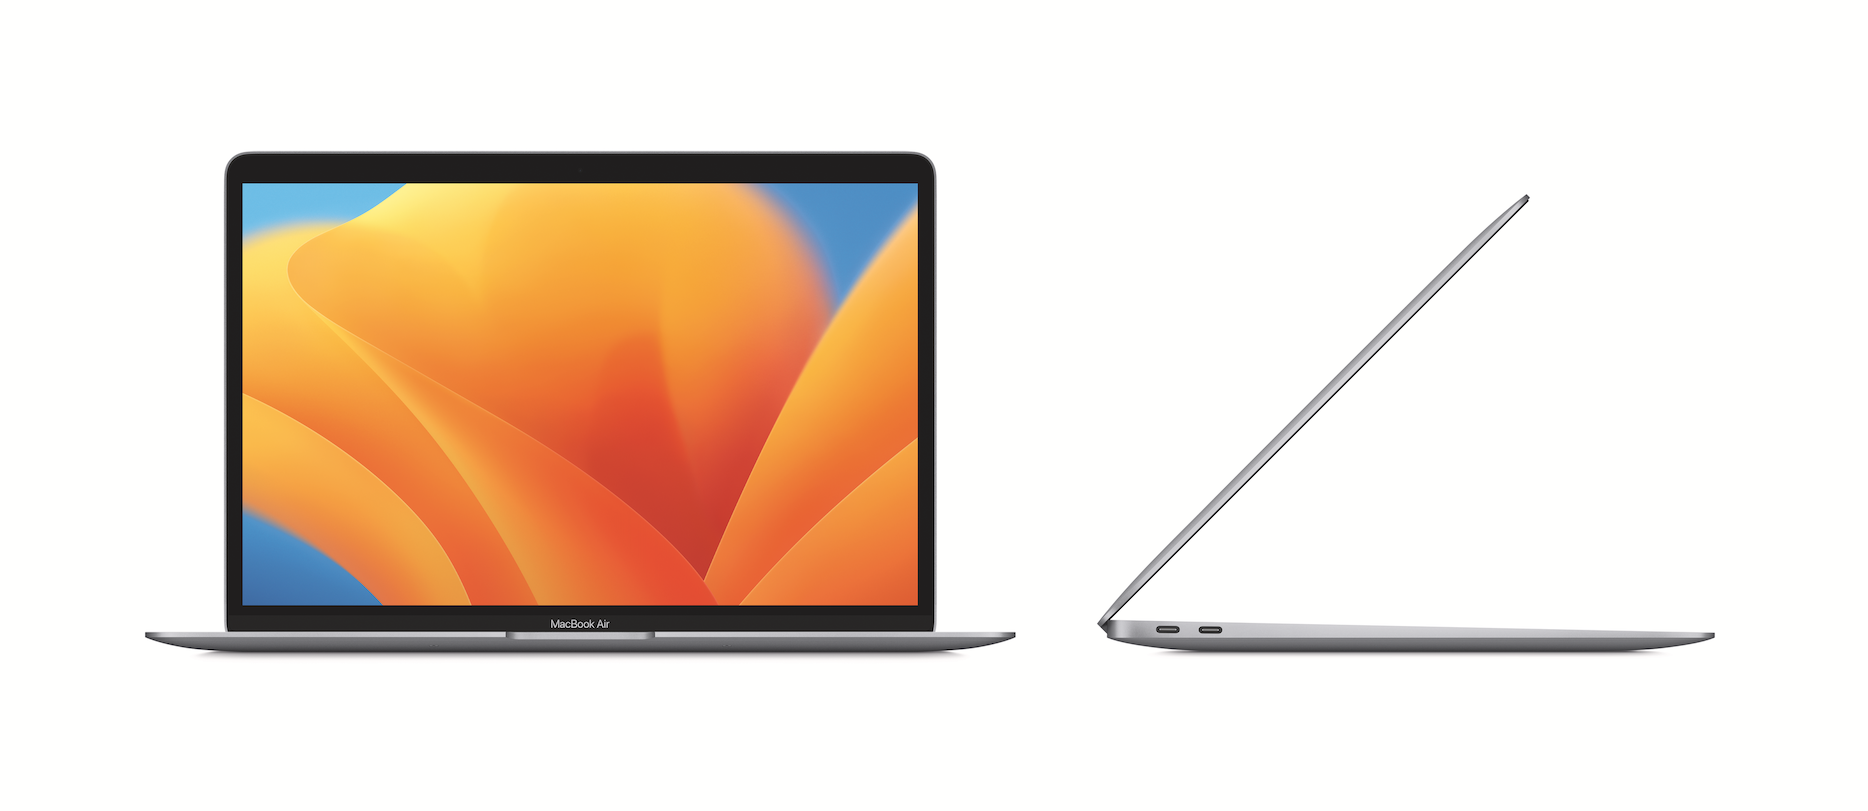 MacBook Air s čipem M1 nyní levněji.